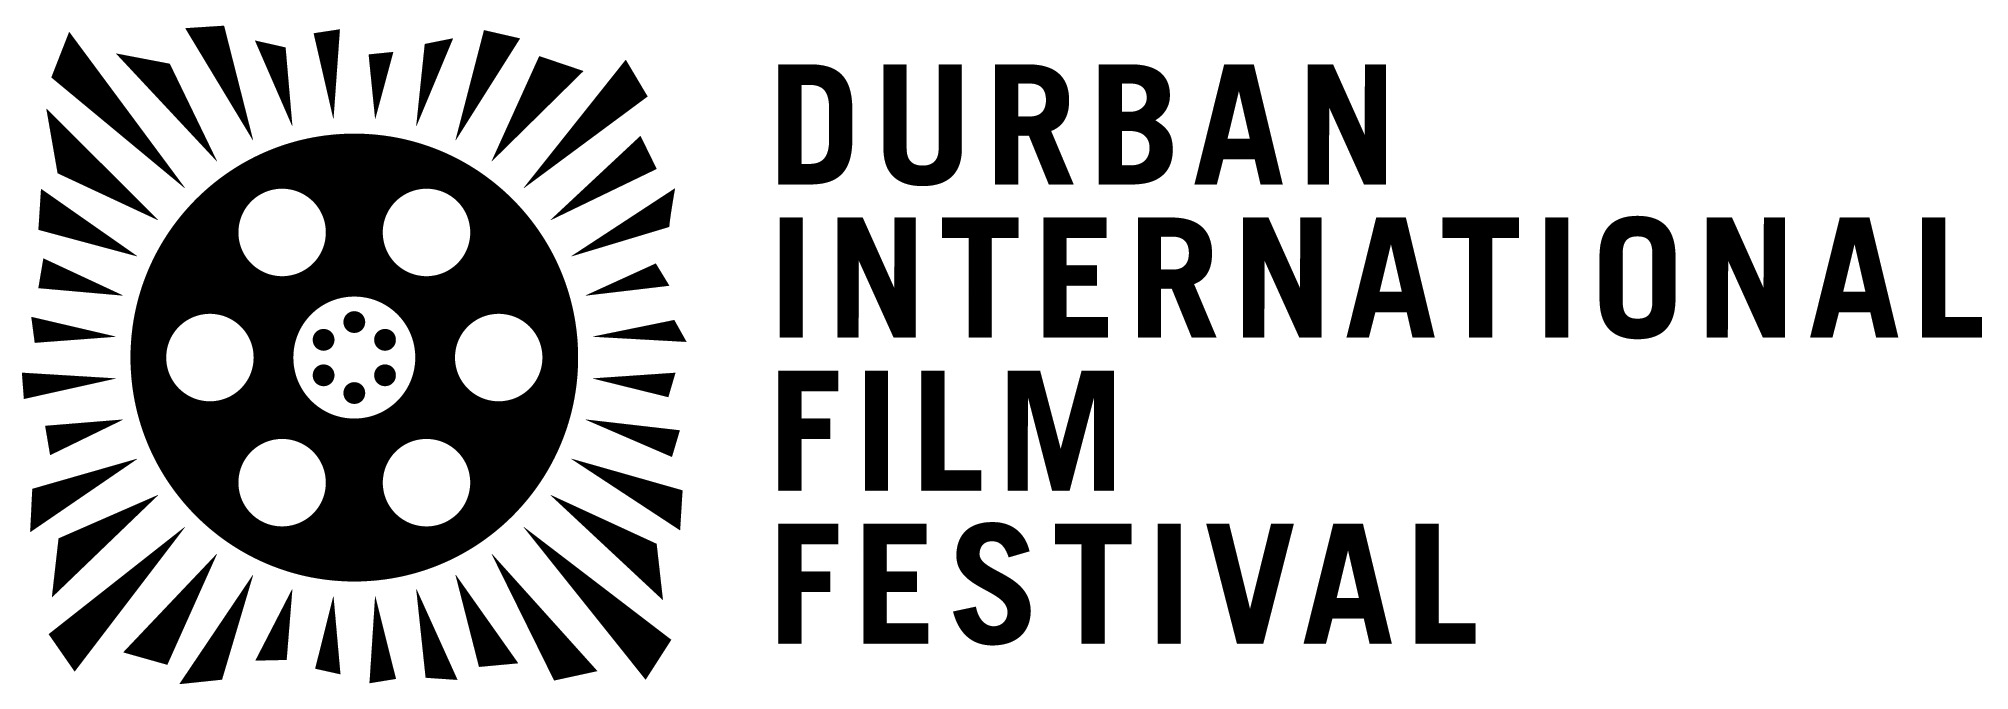 durban international film festival